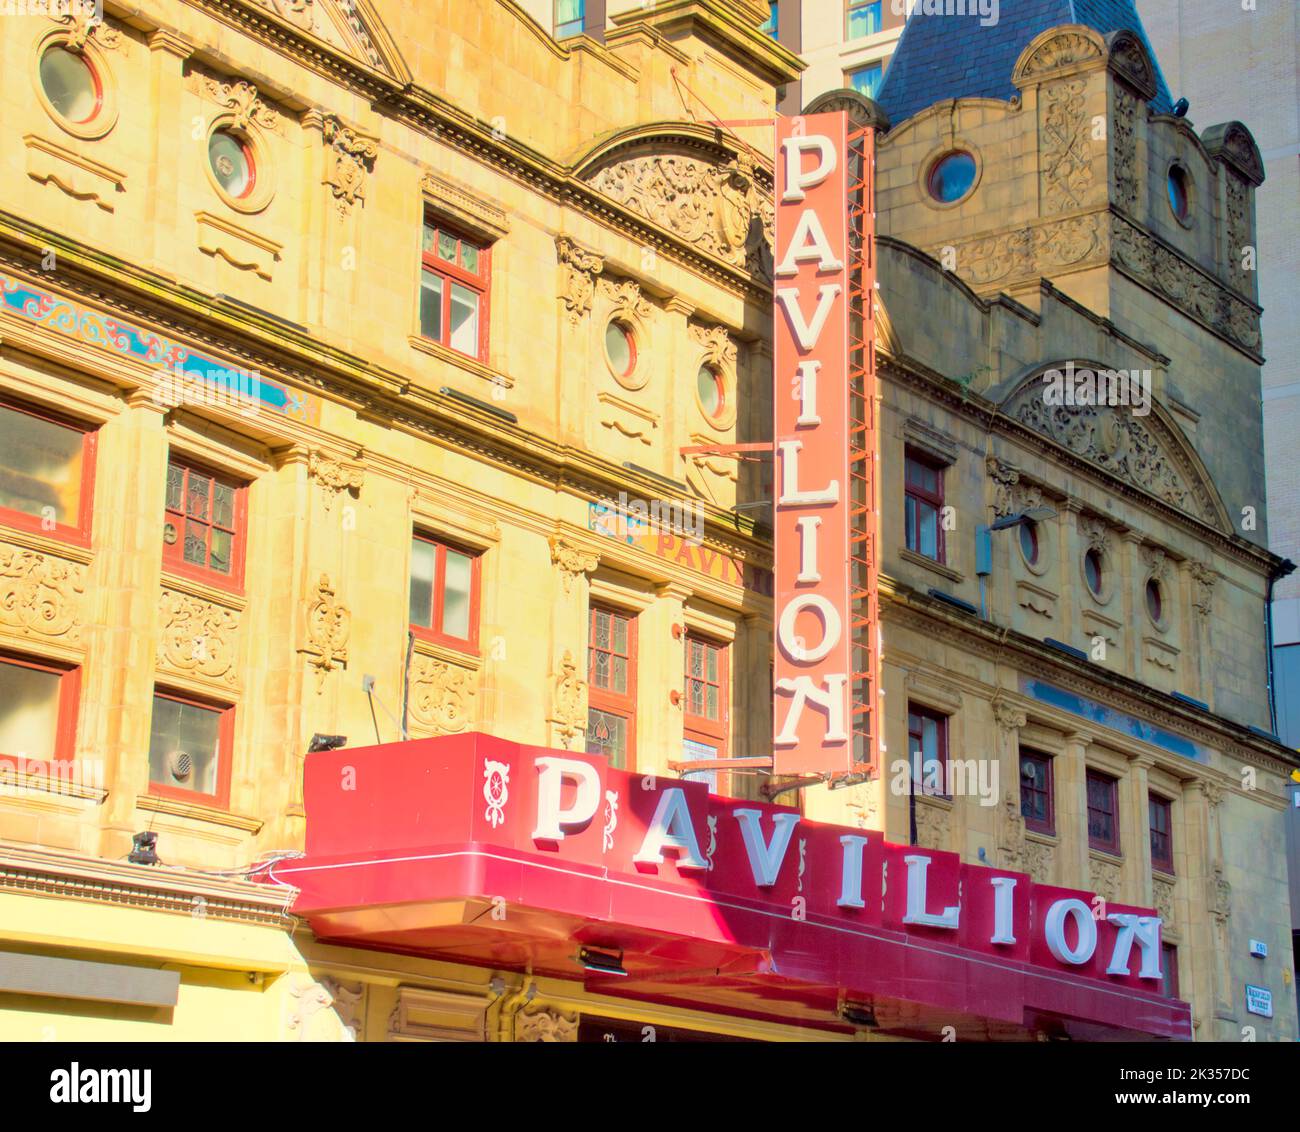 Pavilion theatre located on Renfield Street Glasgow, Scotland, UK Stock Photo